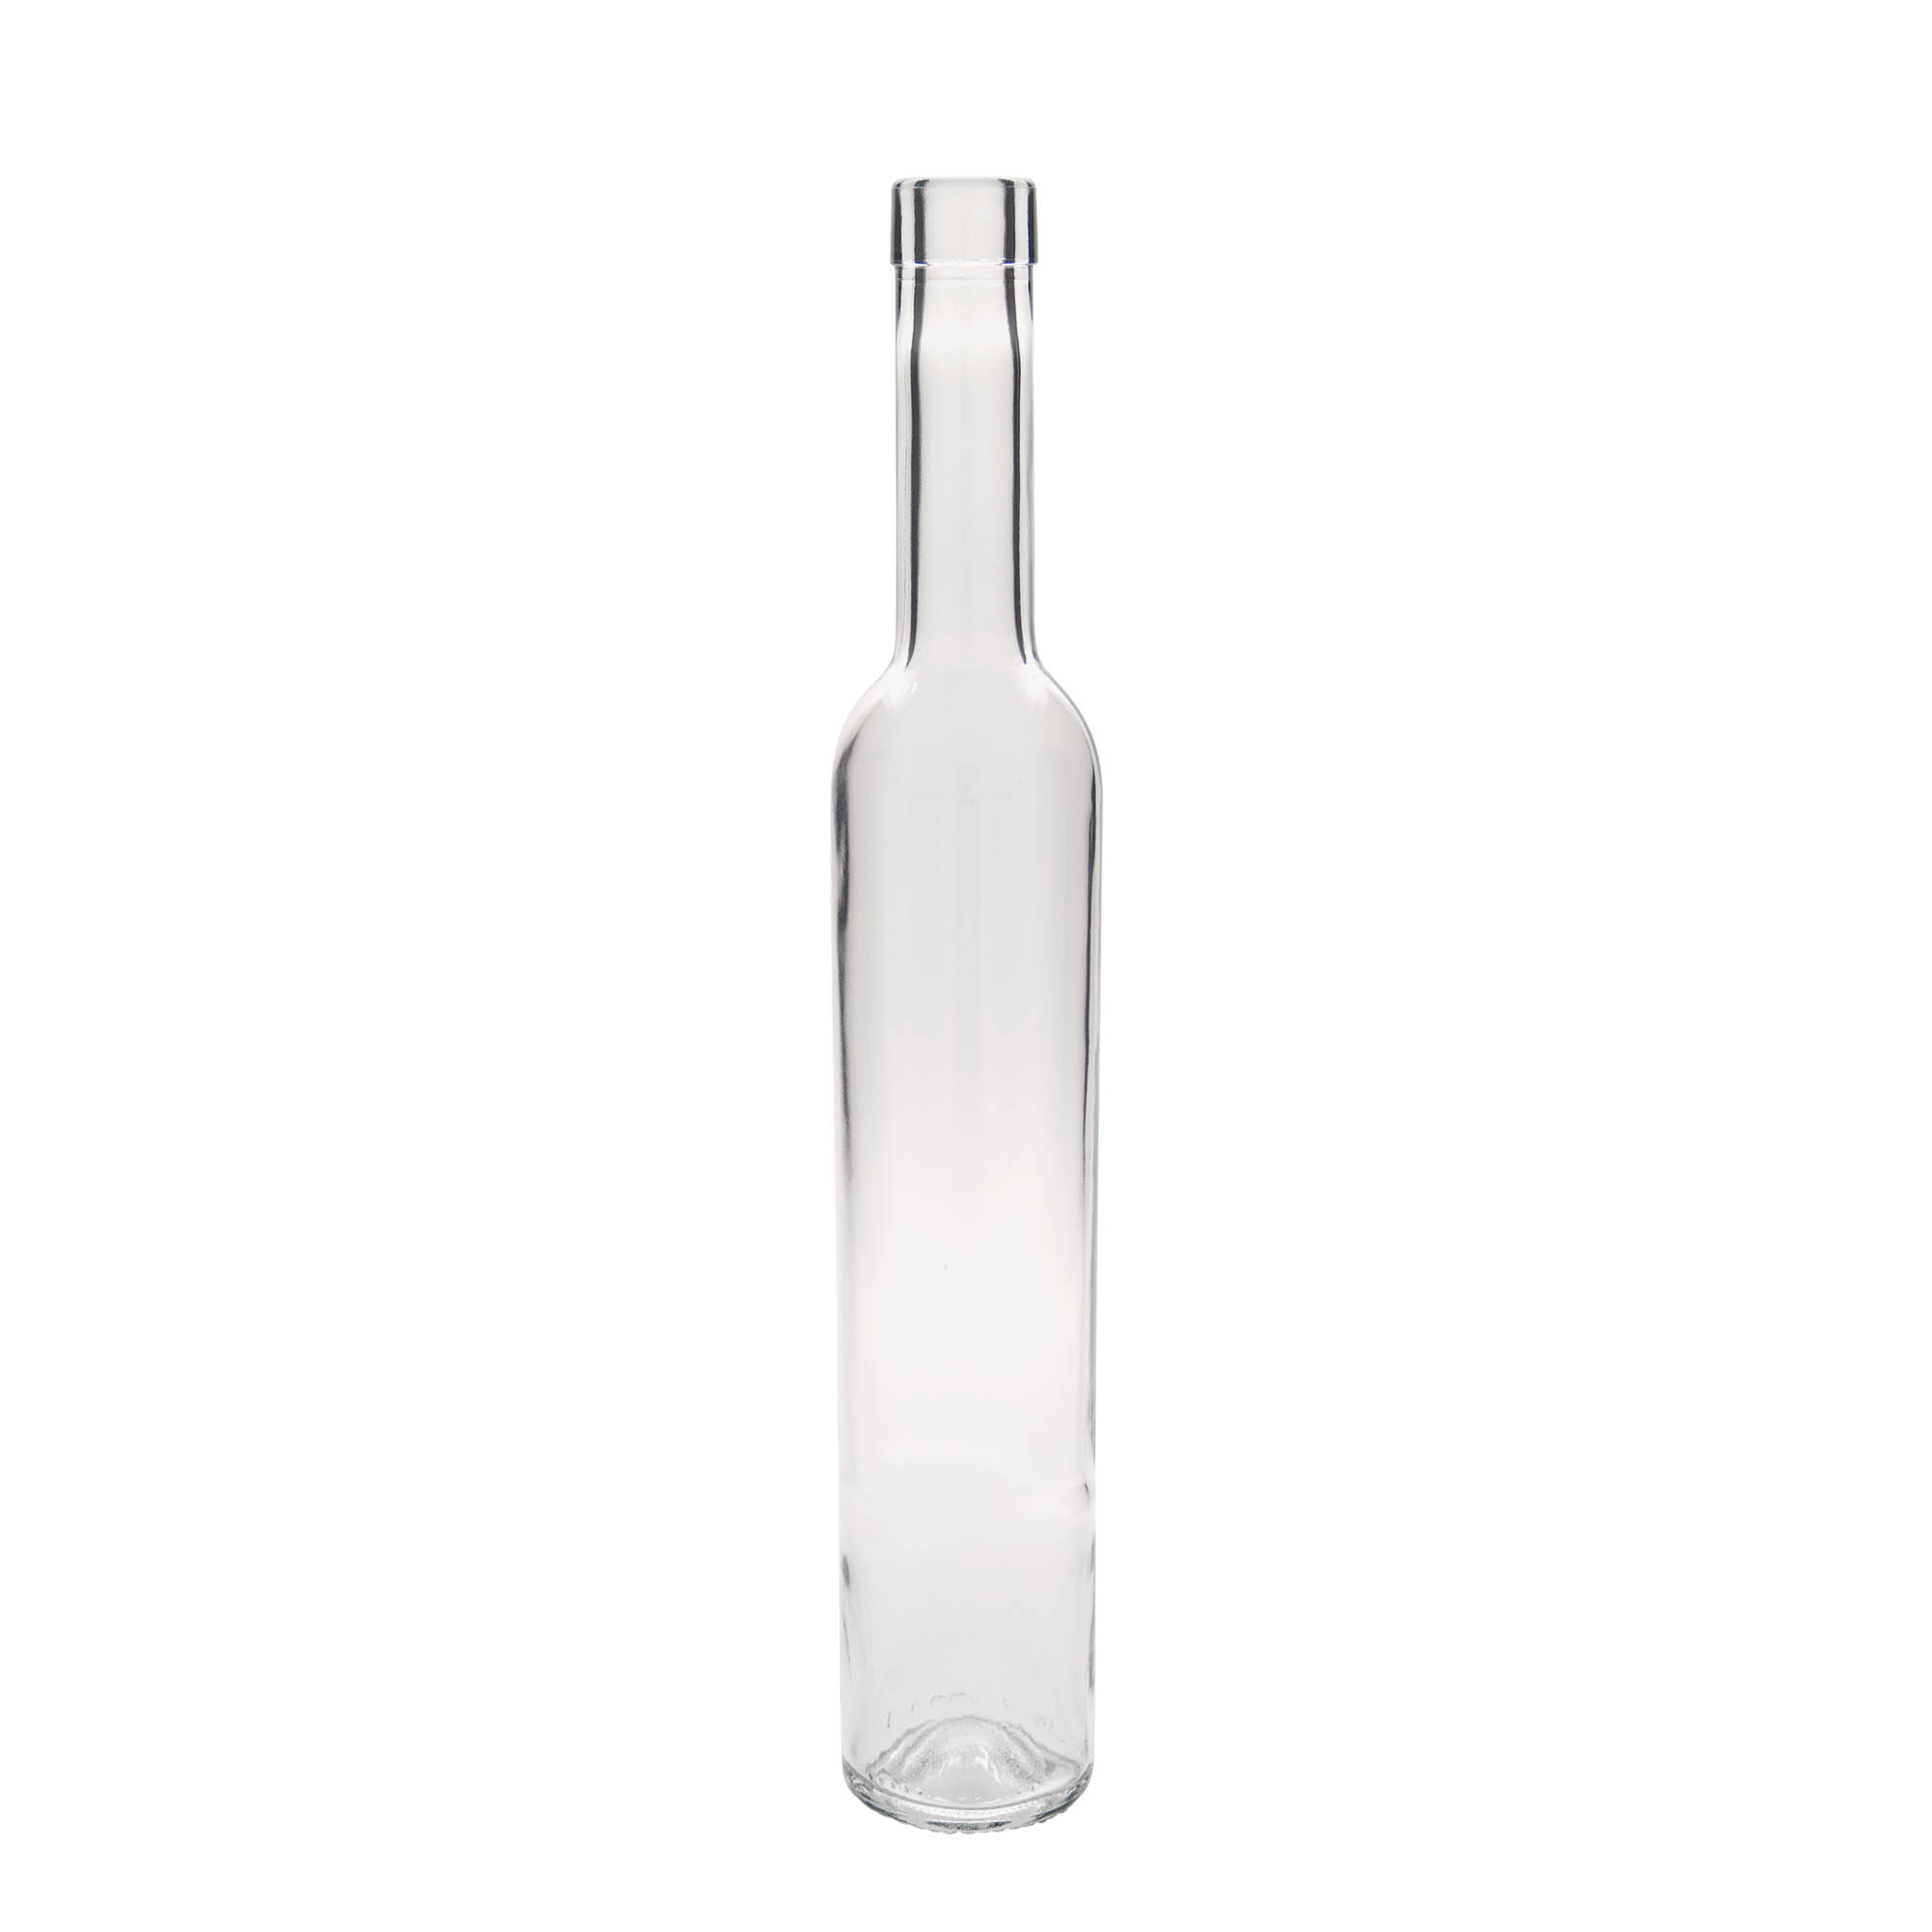 500 ml glass bottle 'Maximo', closure: cork